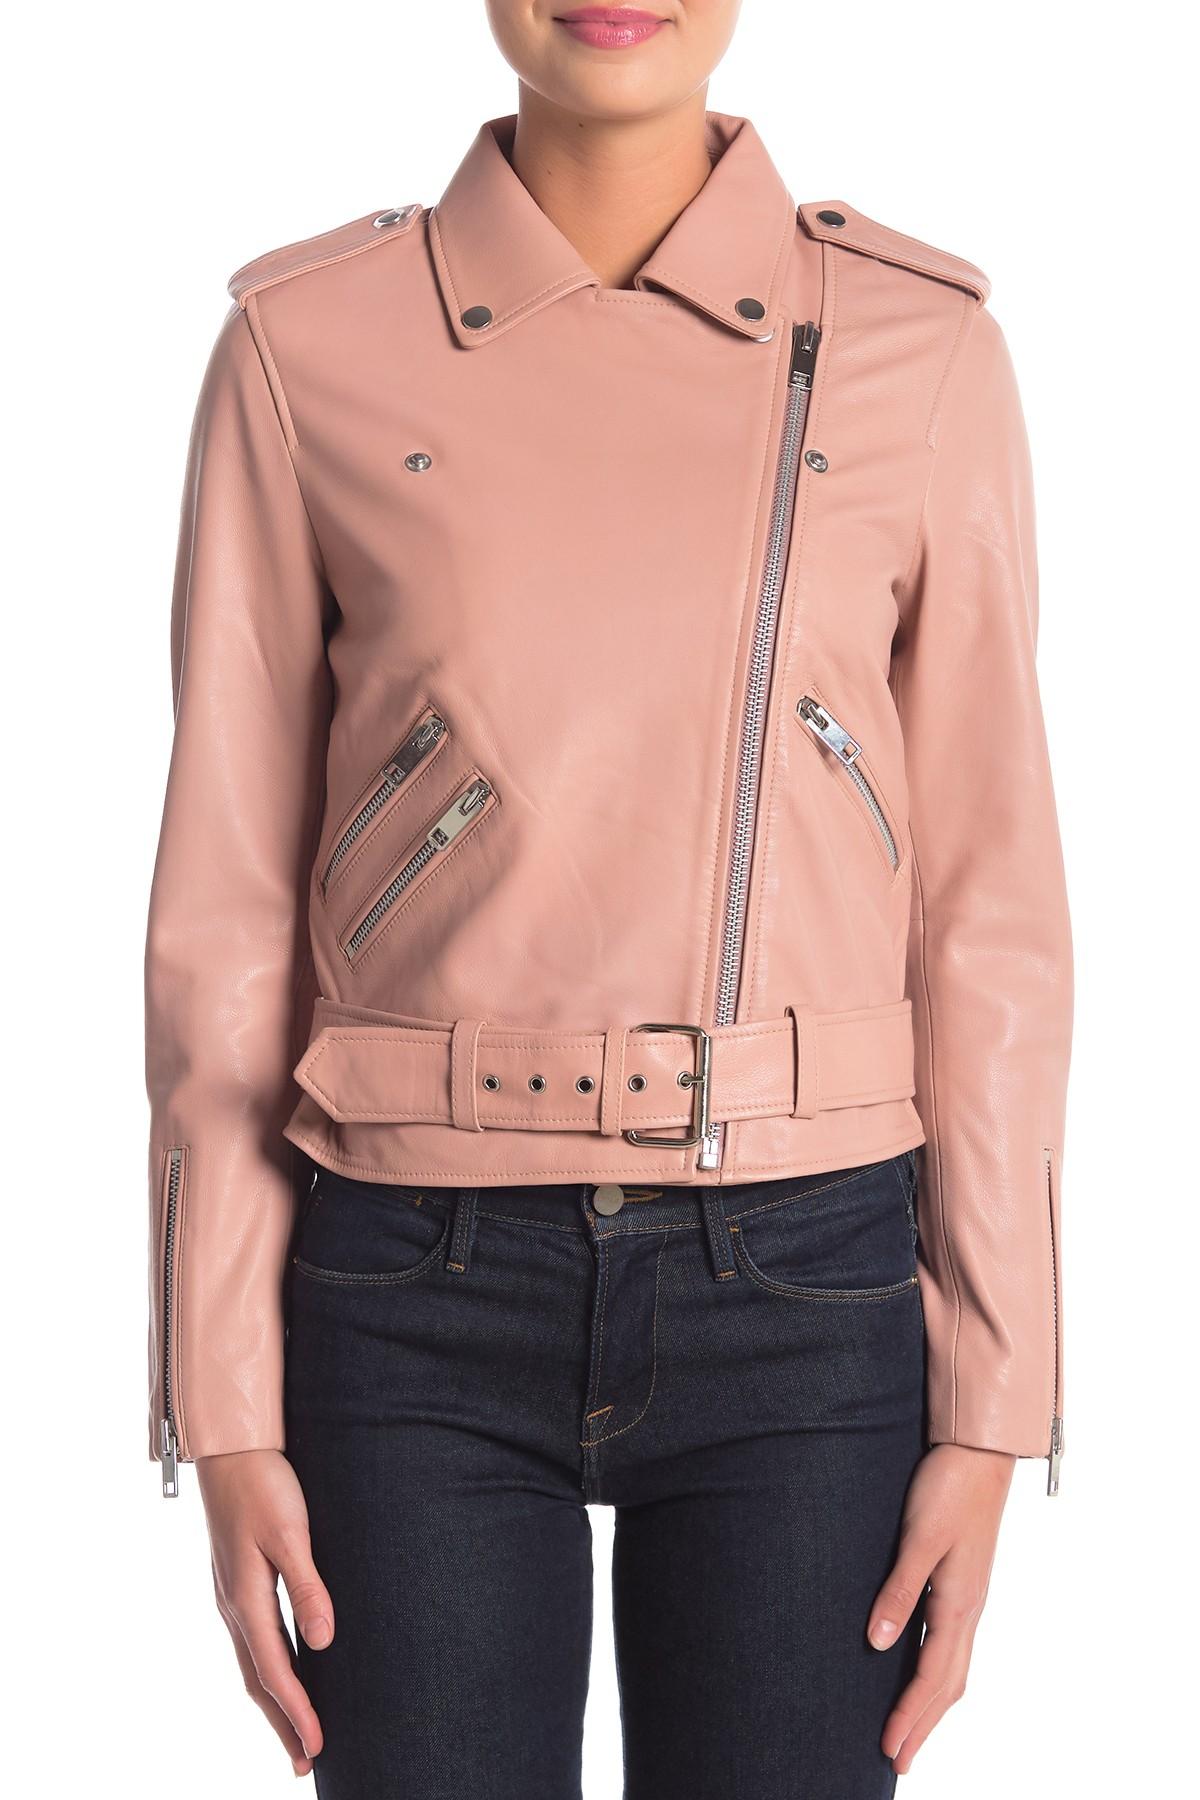 Lyst - Walter Baker Allison Leather Jacket in Pink